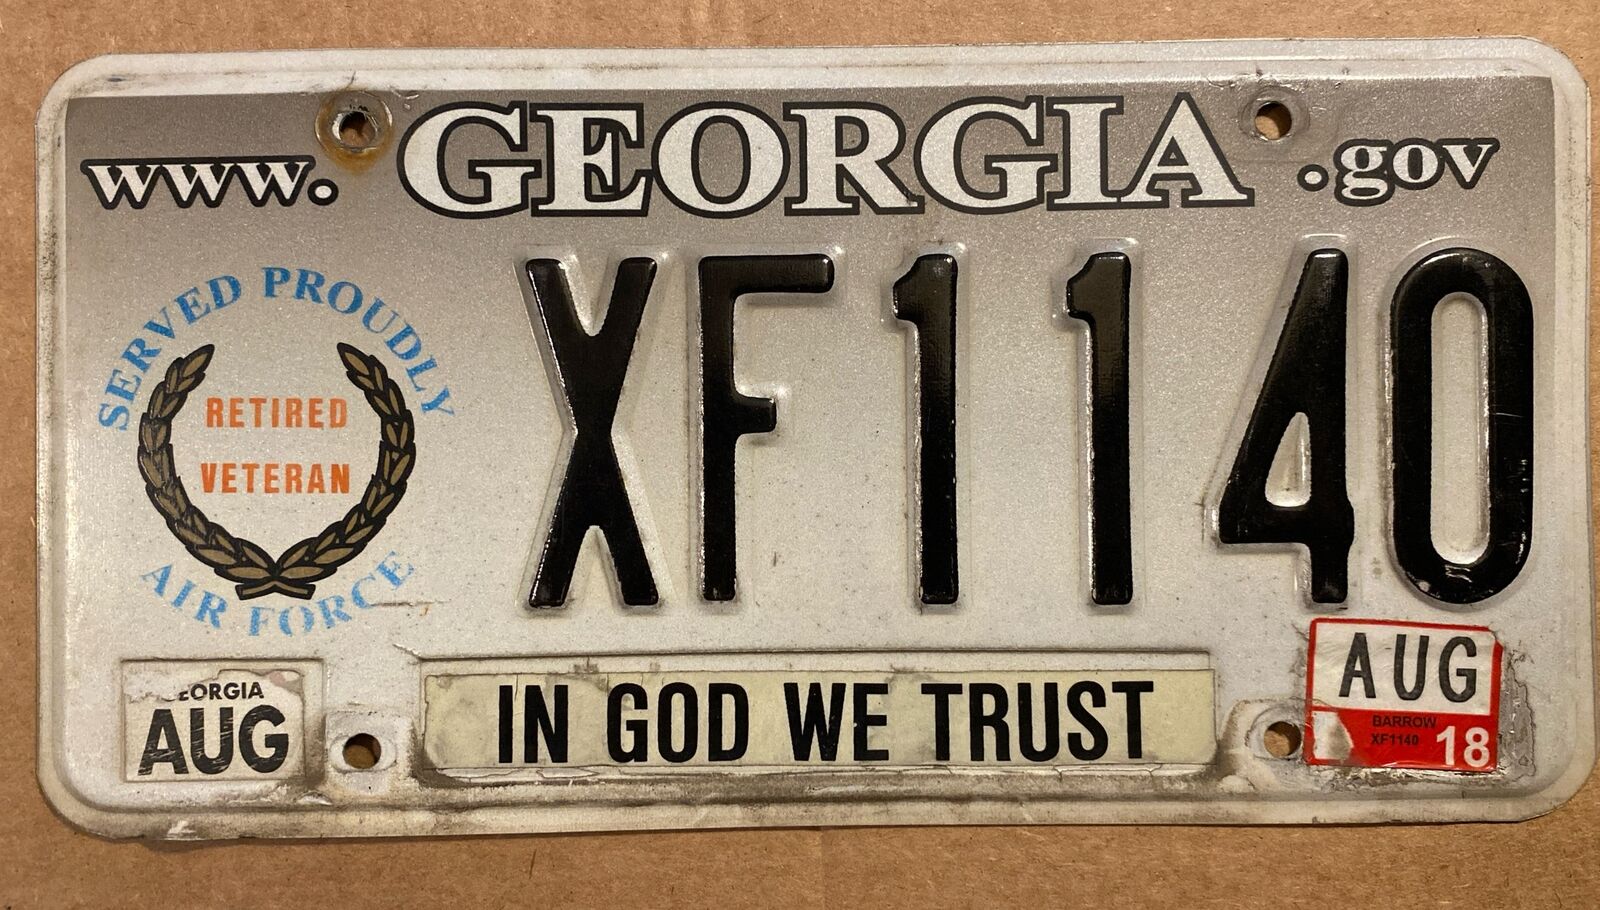 2018 Georgia license plate - US Air Force Retired Veteran military